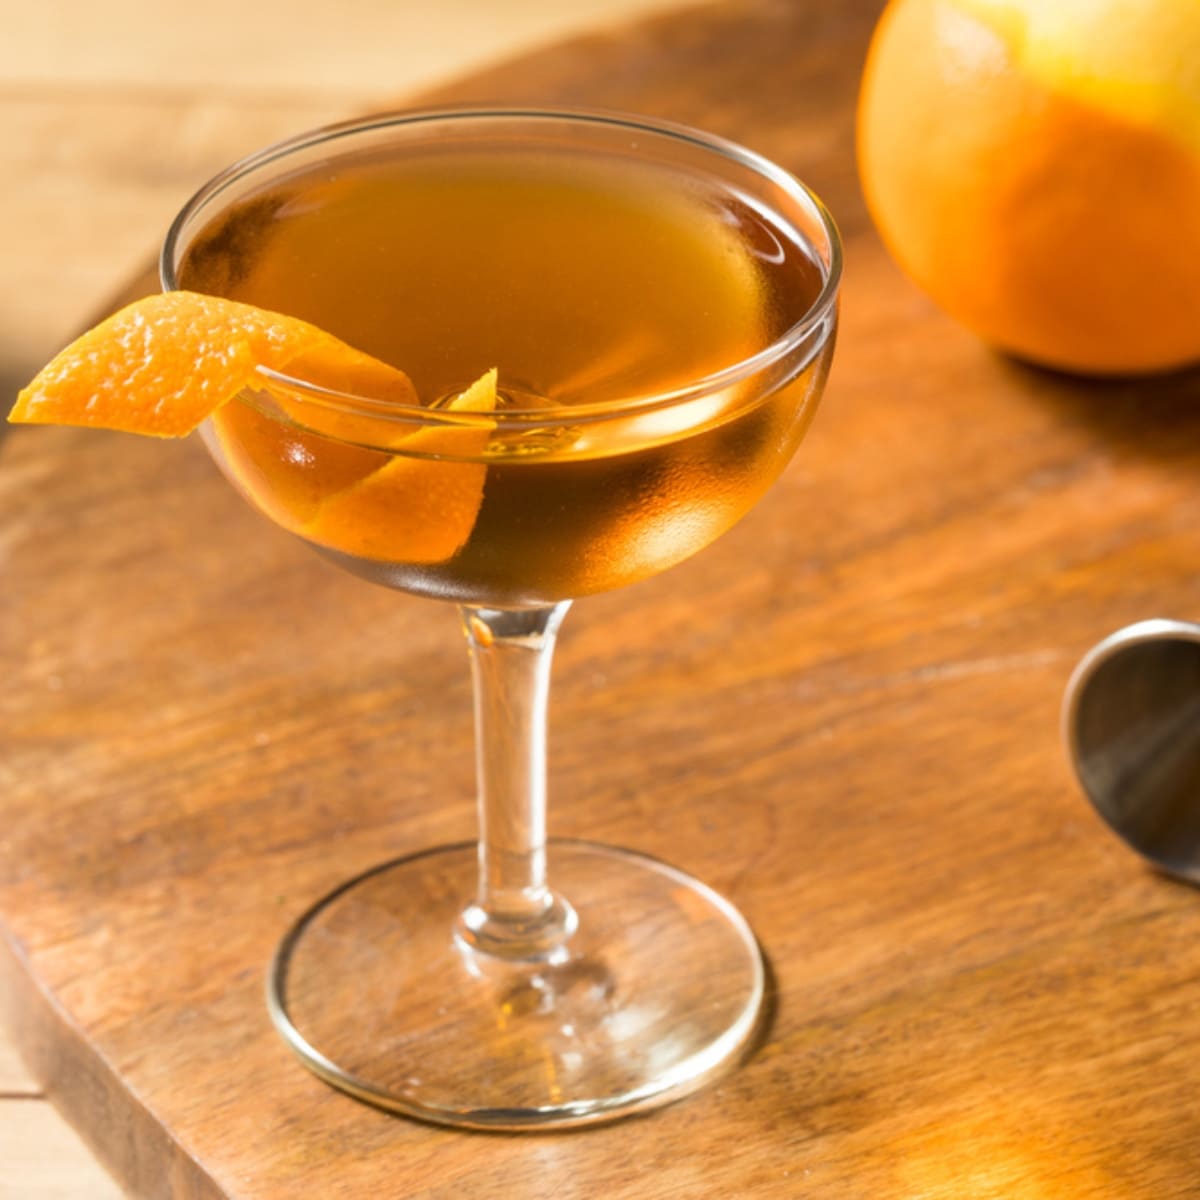 Boozy Hanky Panky Cocktail With Orange Peel Garnish